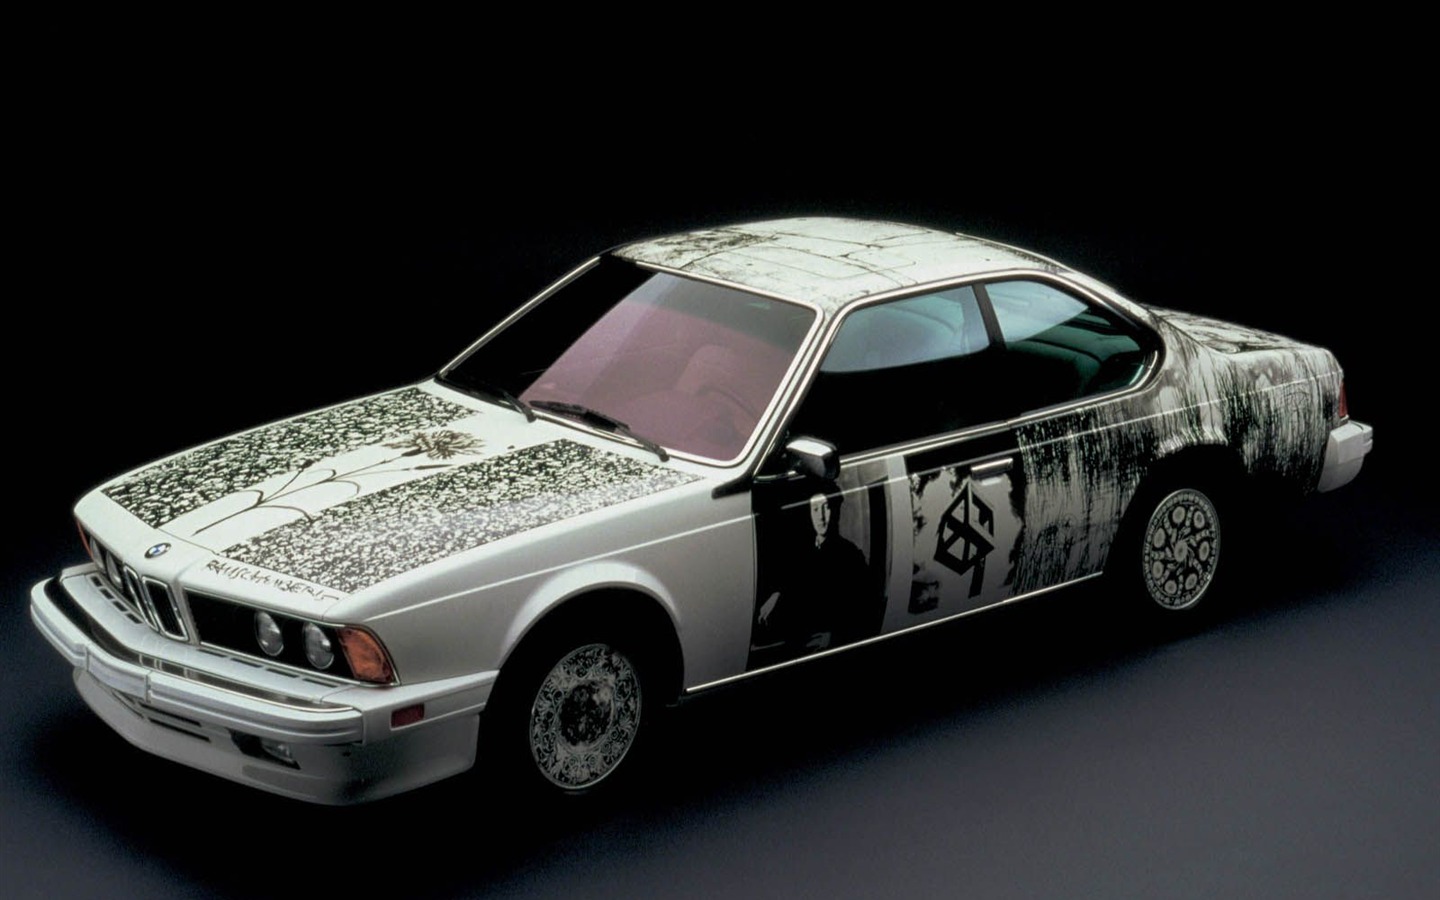  BMWは、ArtCarsの壁紙 #10 - 1440x900